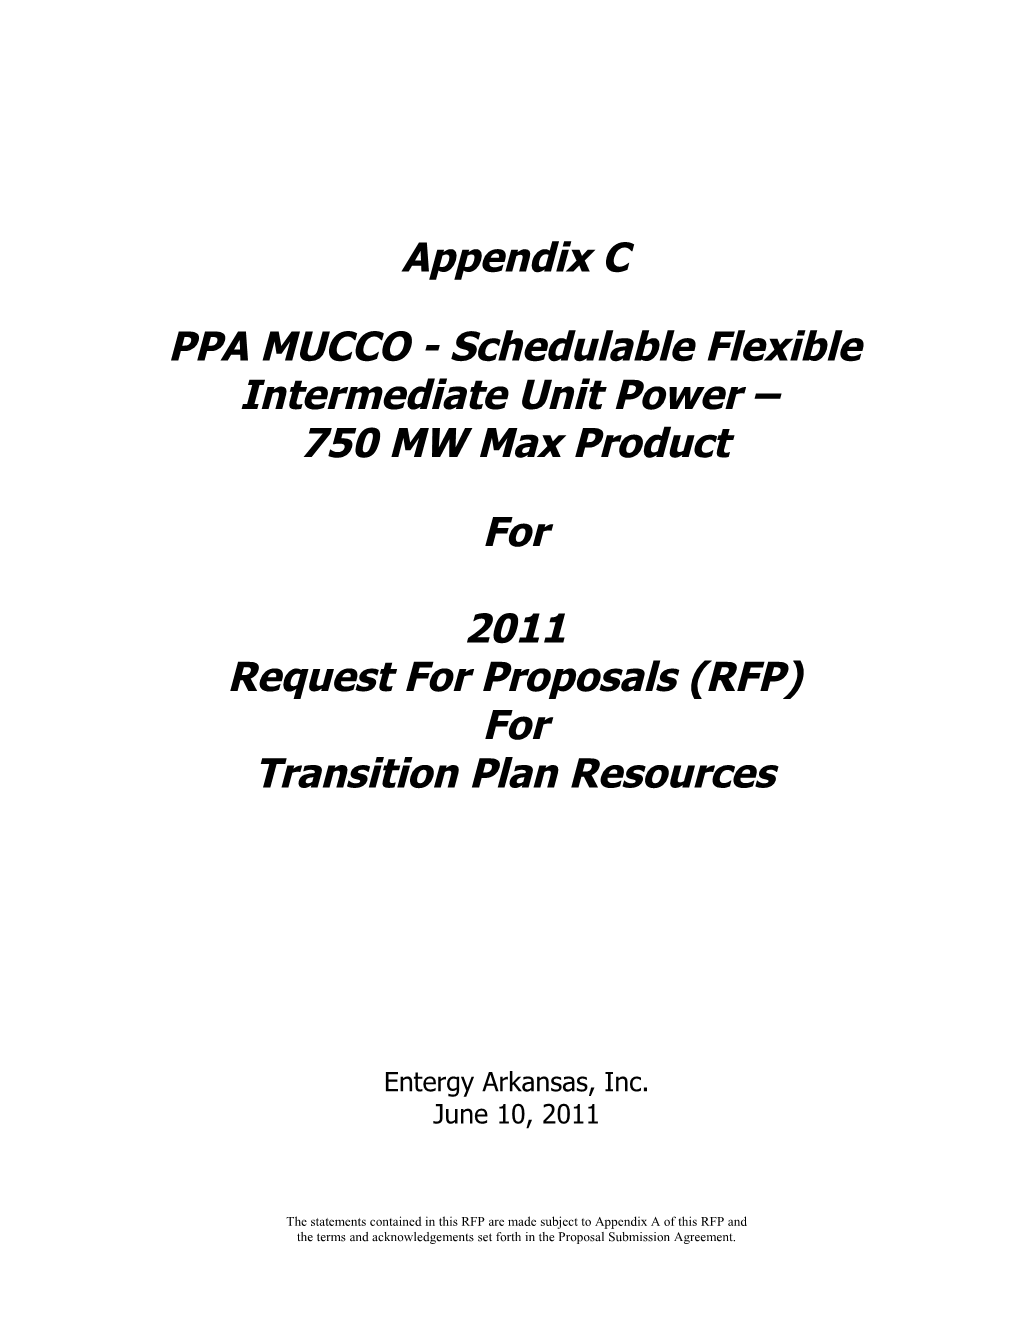 PPA MUCCO - Schedulable Flexible Intermediate Unit Power